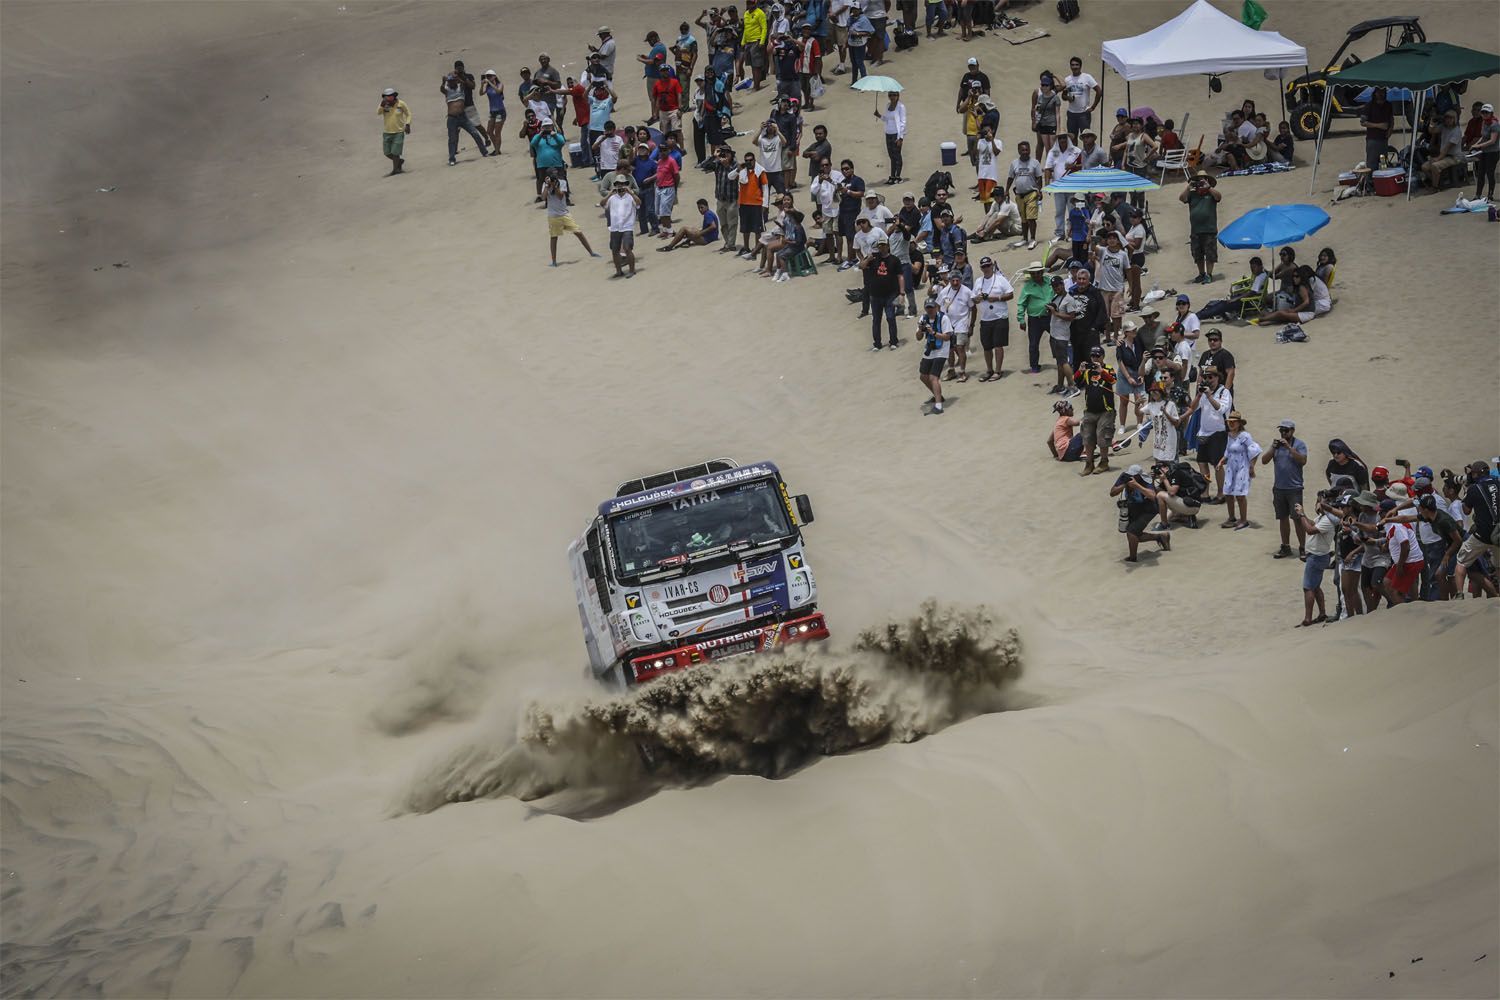 Rallye Dakar 2018, 2. etapa: Martin Kolomý, Tatra